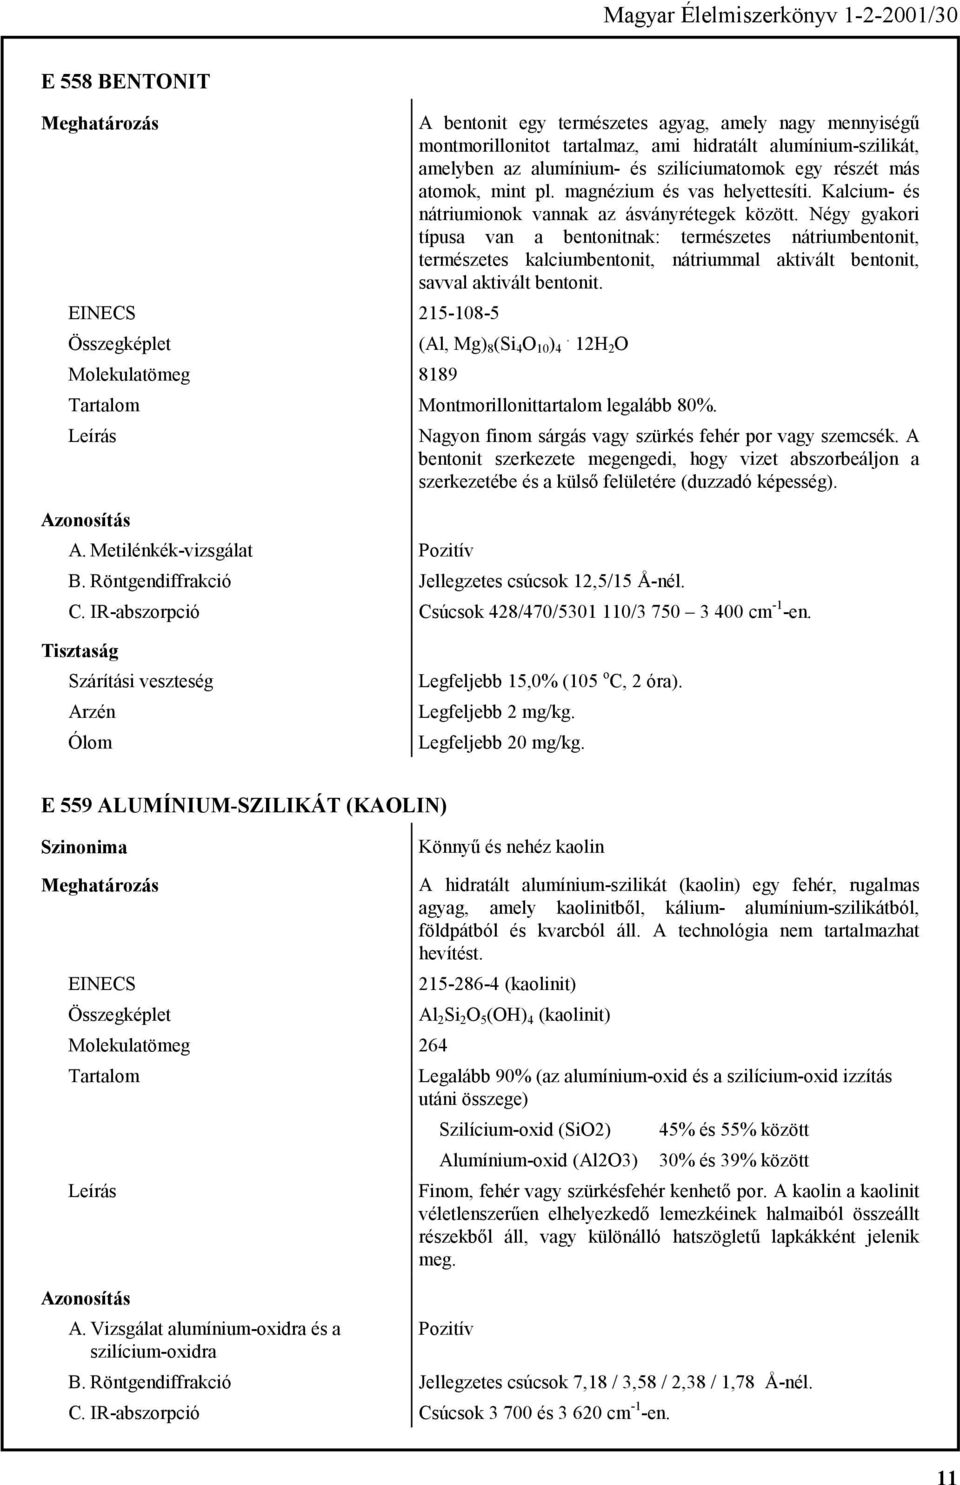 MAGYAR ÉLELMISZERKÖNYV. Codex Alimentarius Hungaricus - PDF Free Download